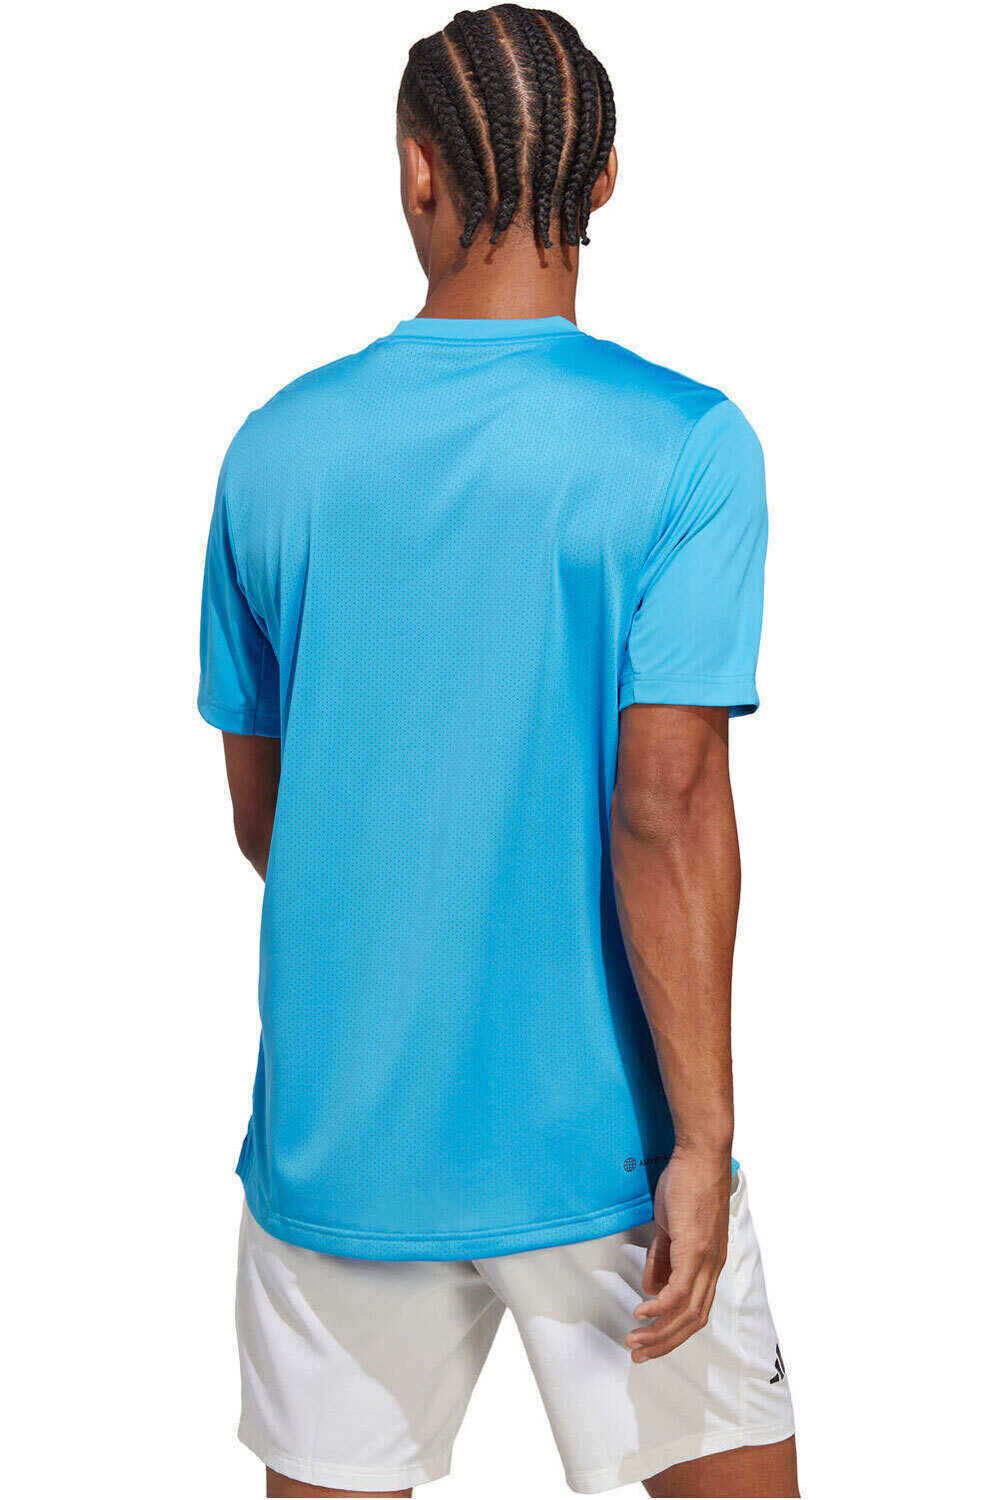 adidas camiseta tenis manga corta hombre Club Tennis vista trasera